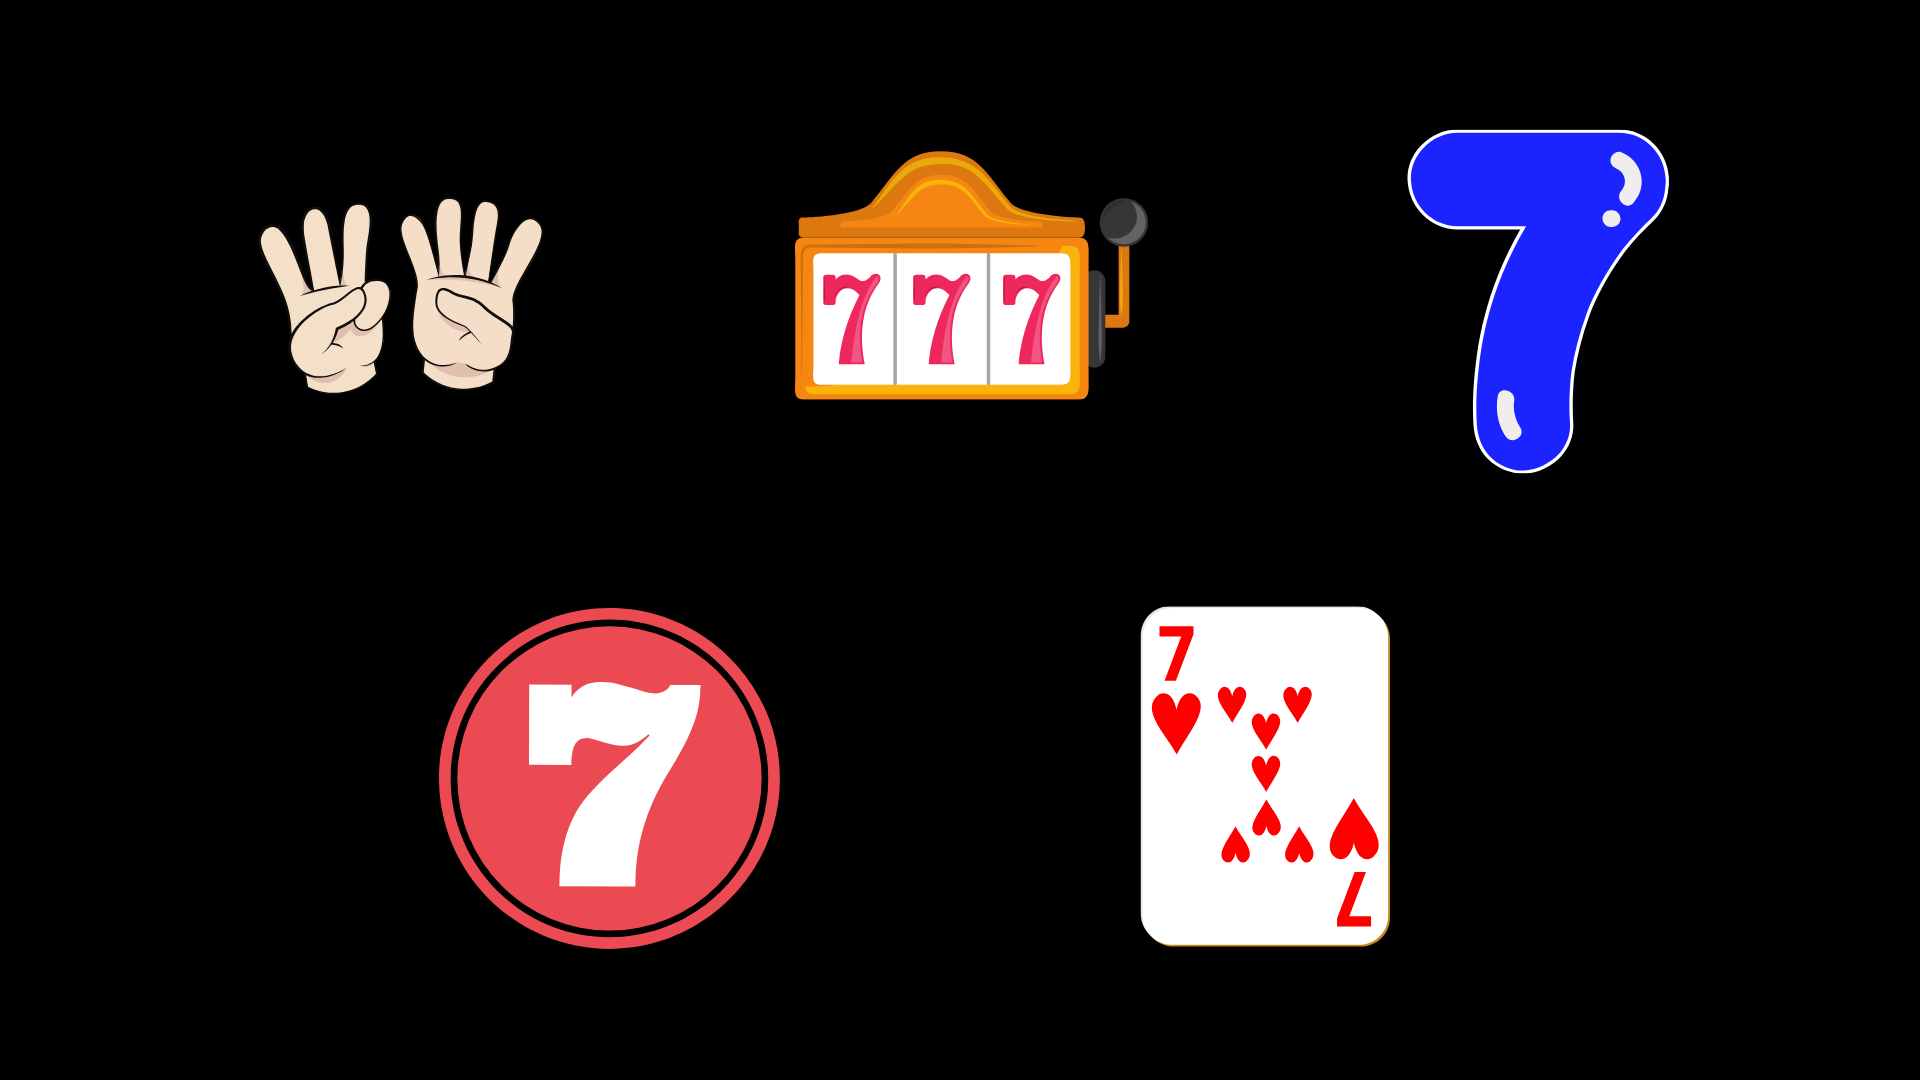 Symbols for 7